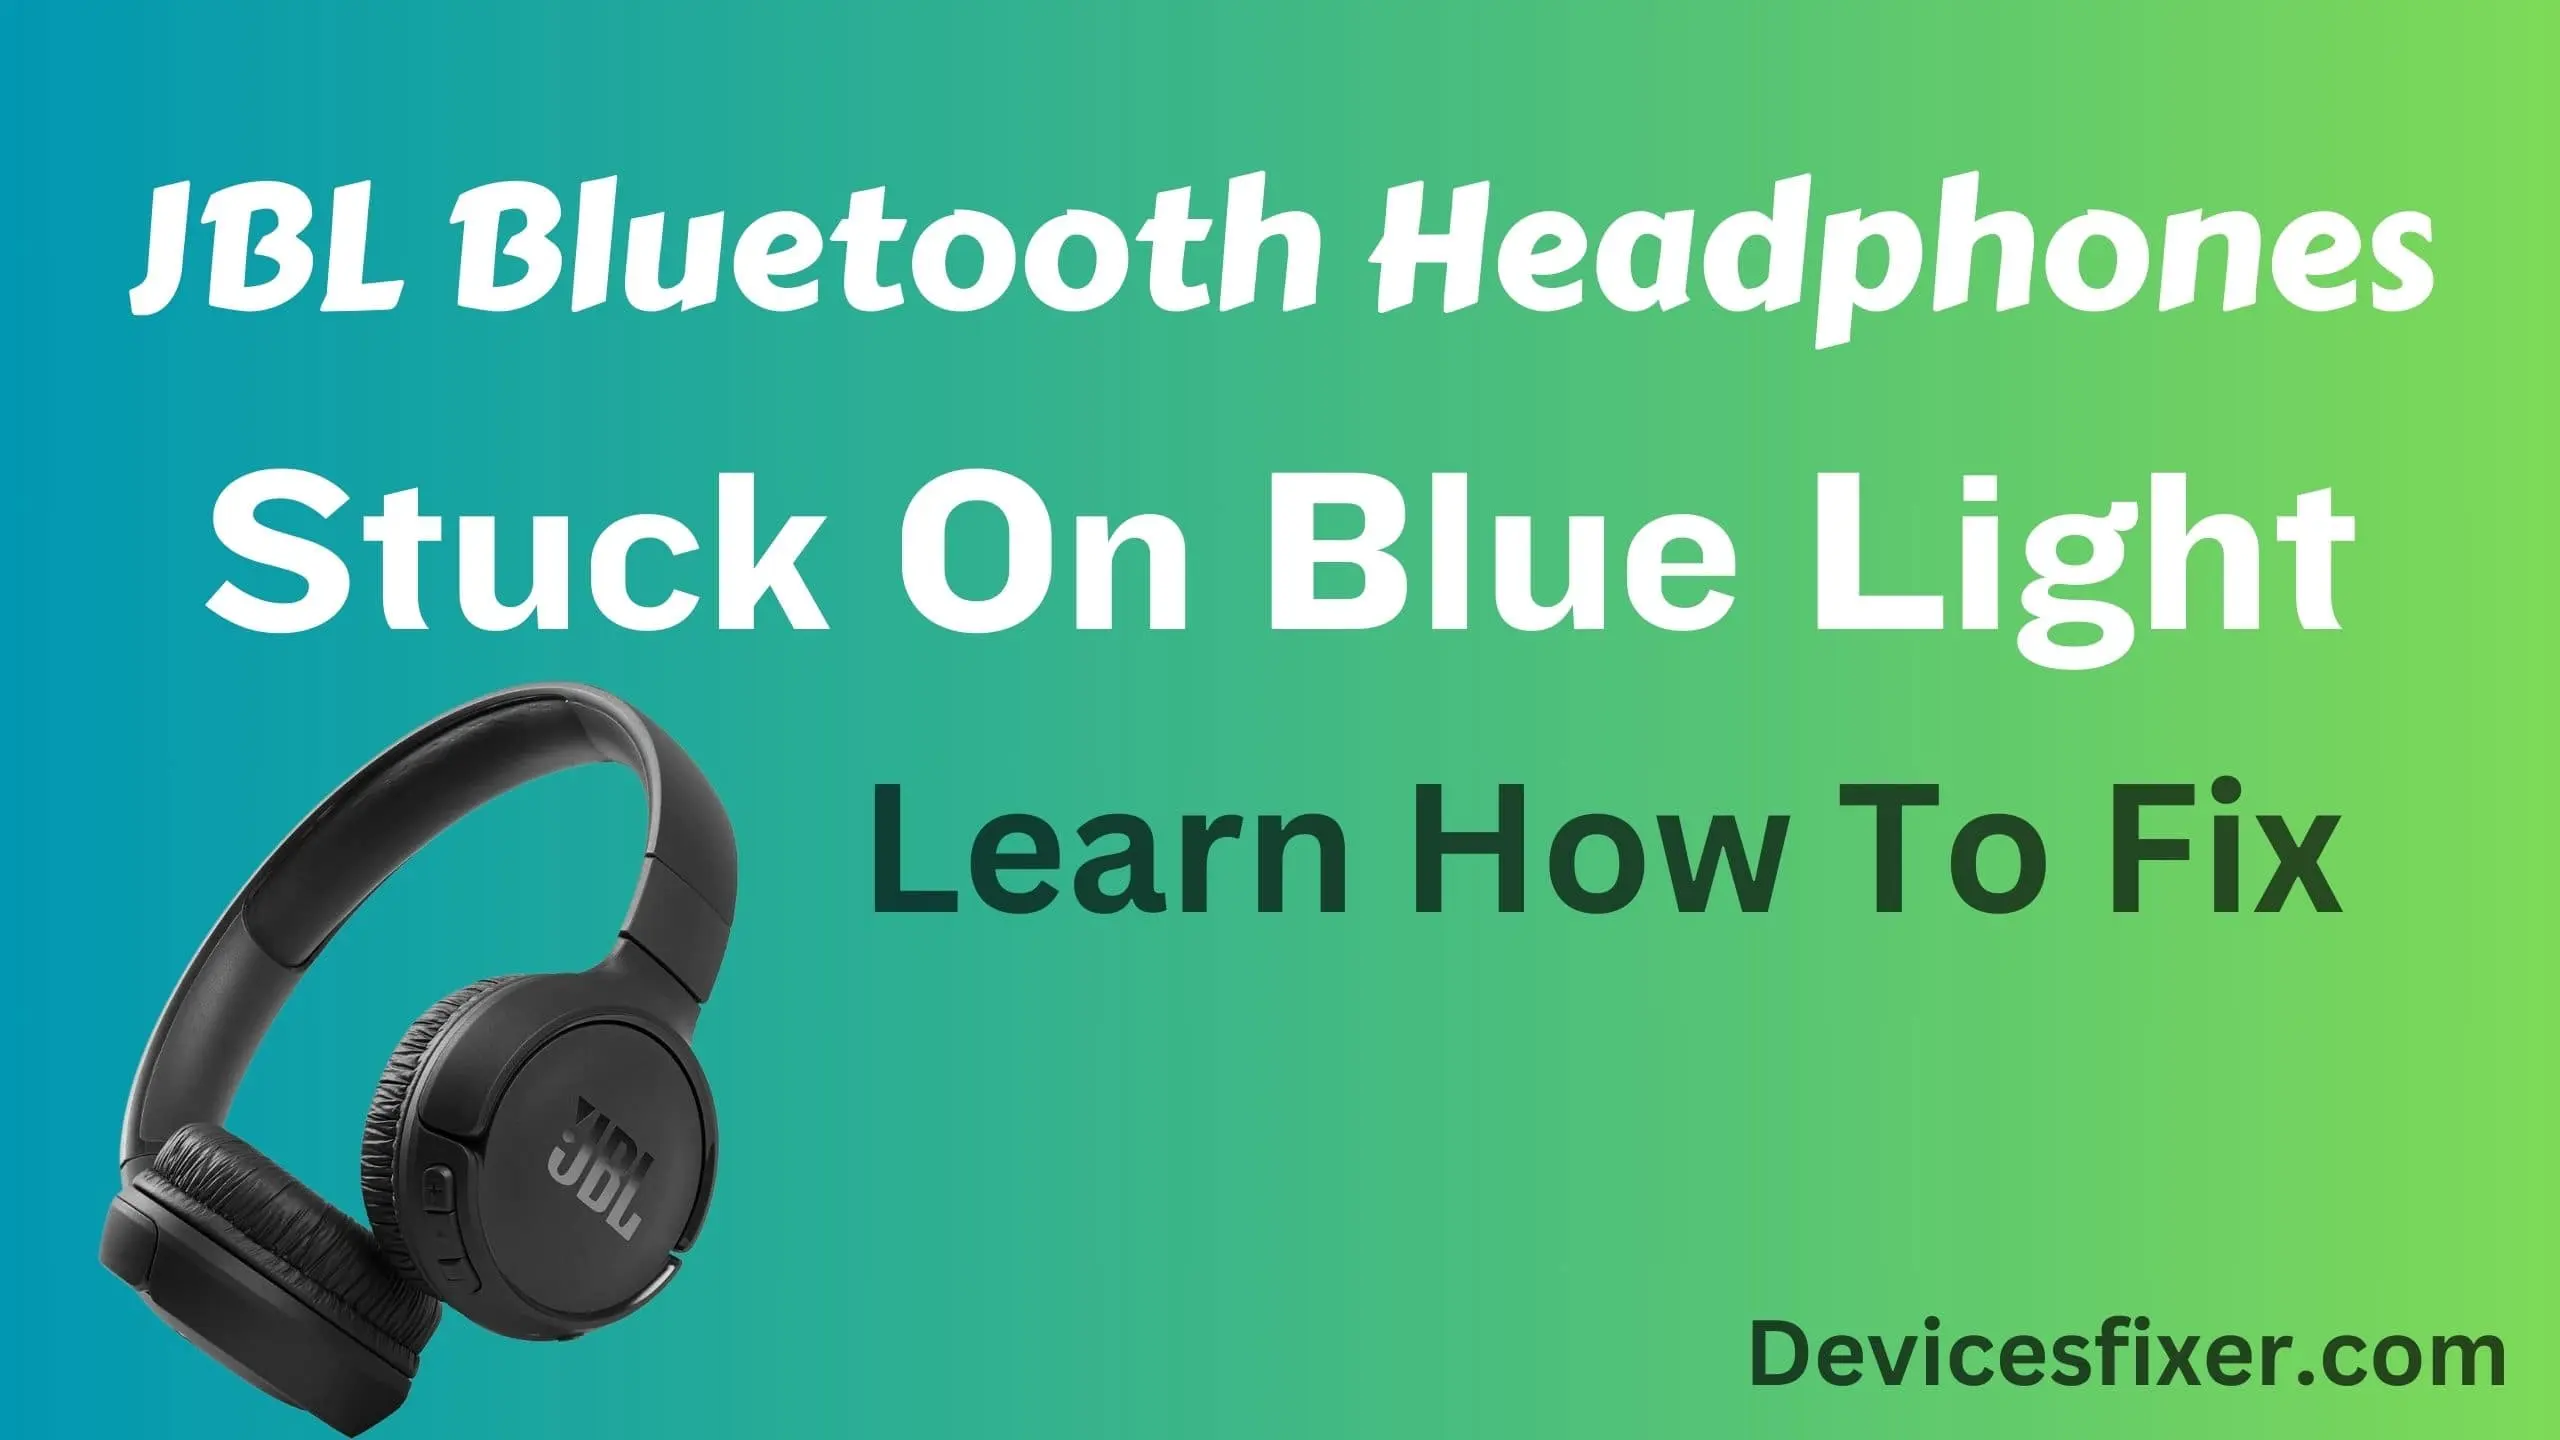 JBL Bluetooth Headphones Stuck On Blue Light - Learn How To Fix